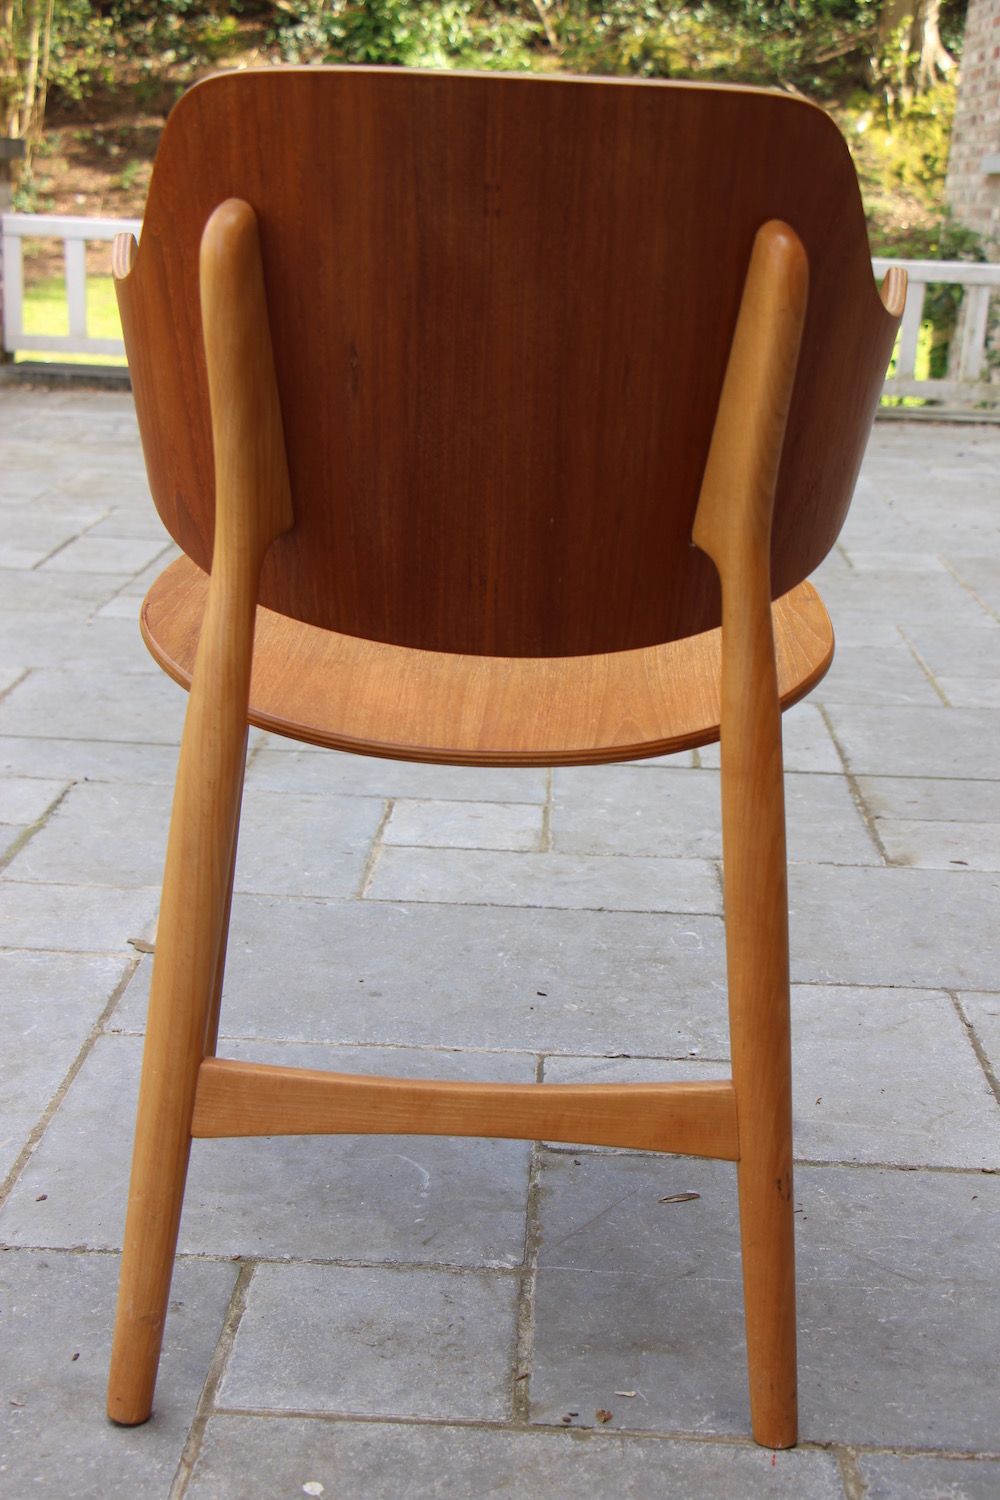 Vintage shell chair by Ib Kofod Larsen